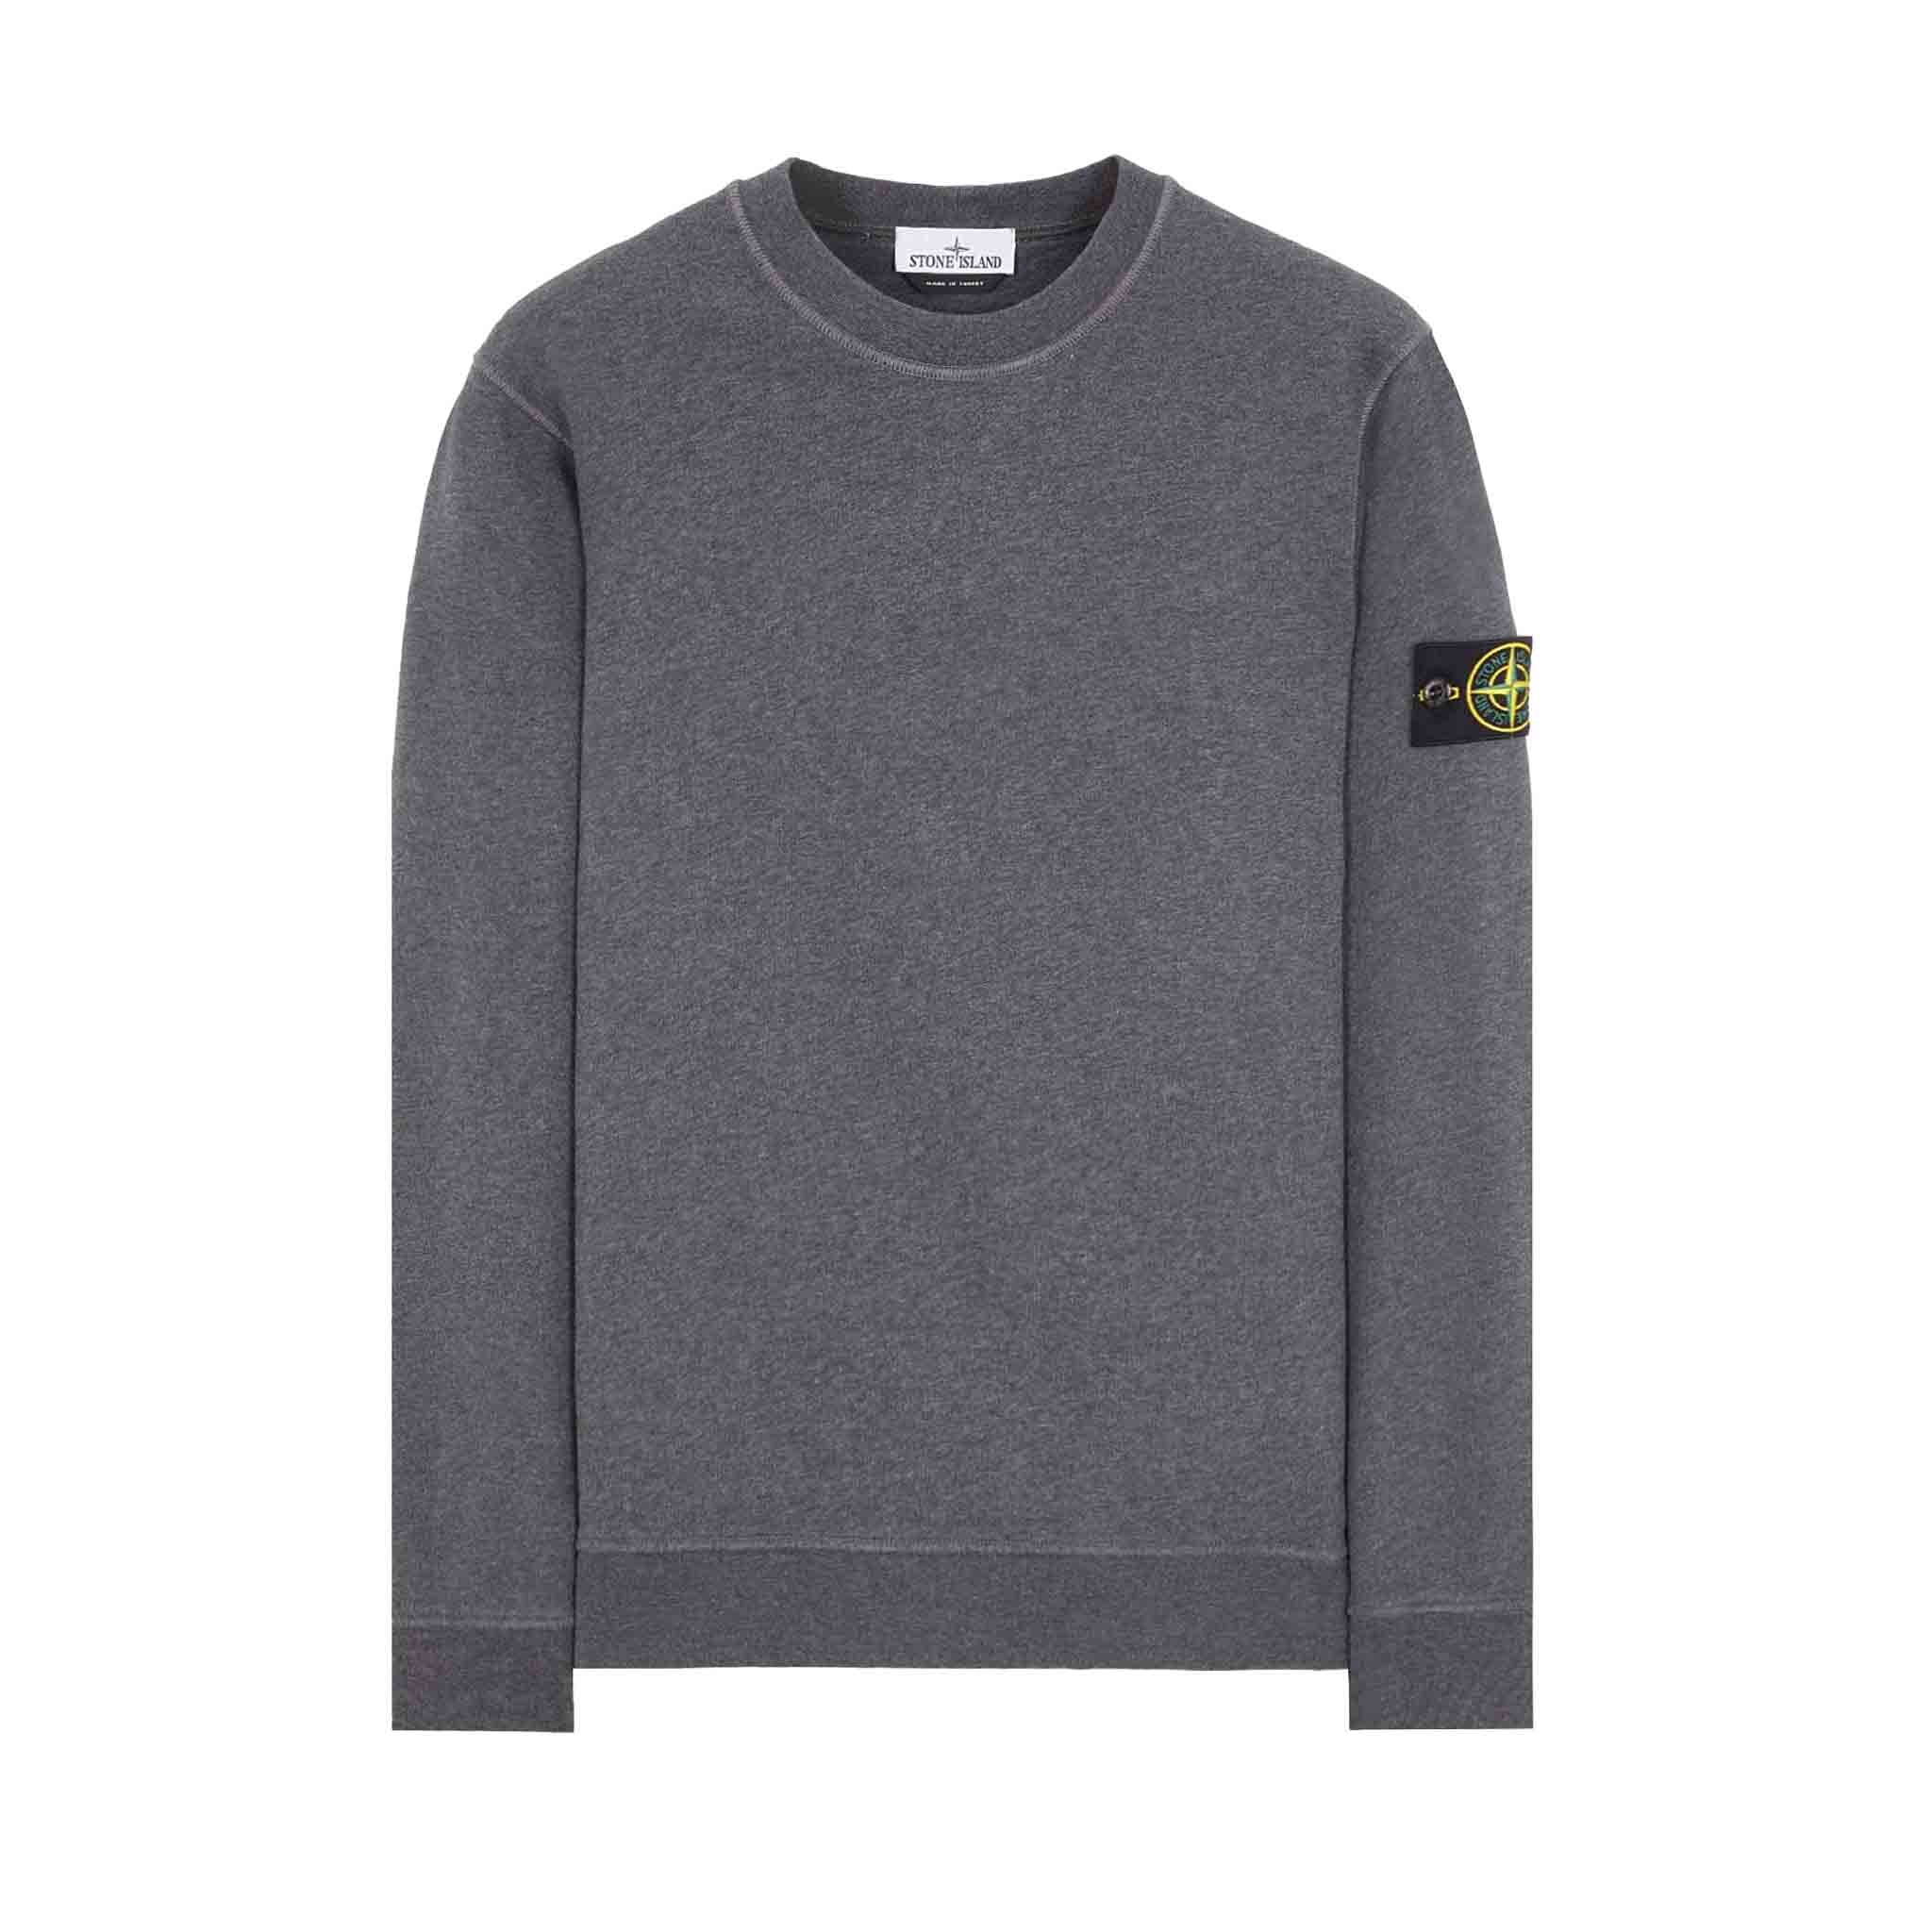 Stone Island Garment Dyed Crewneck Sweatshirt in Dark Grey Melange